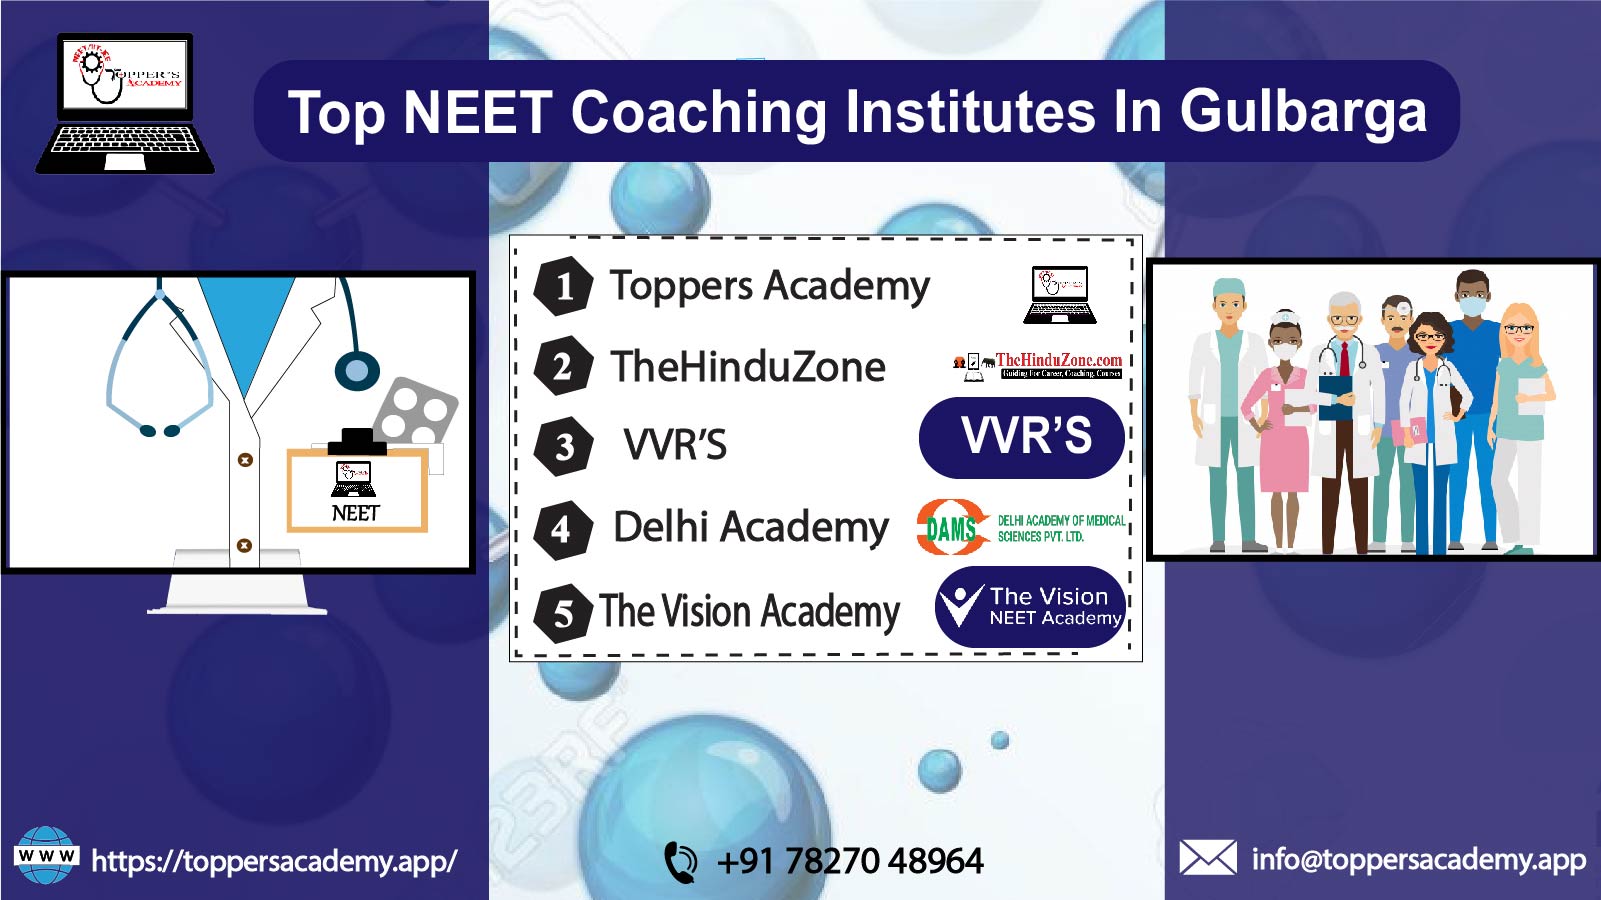 List of the Top NEET Coaching In Gulbarga